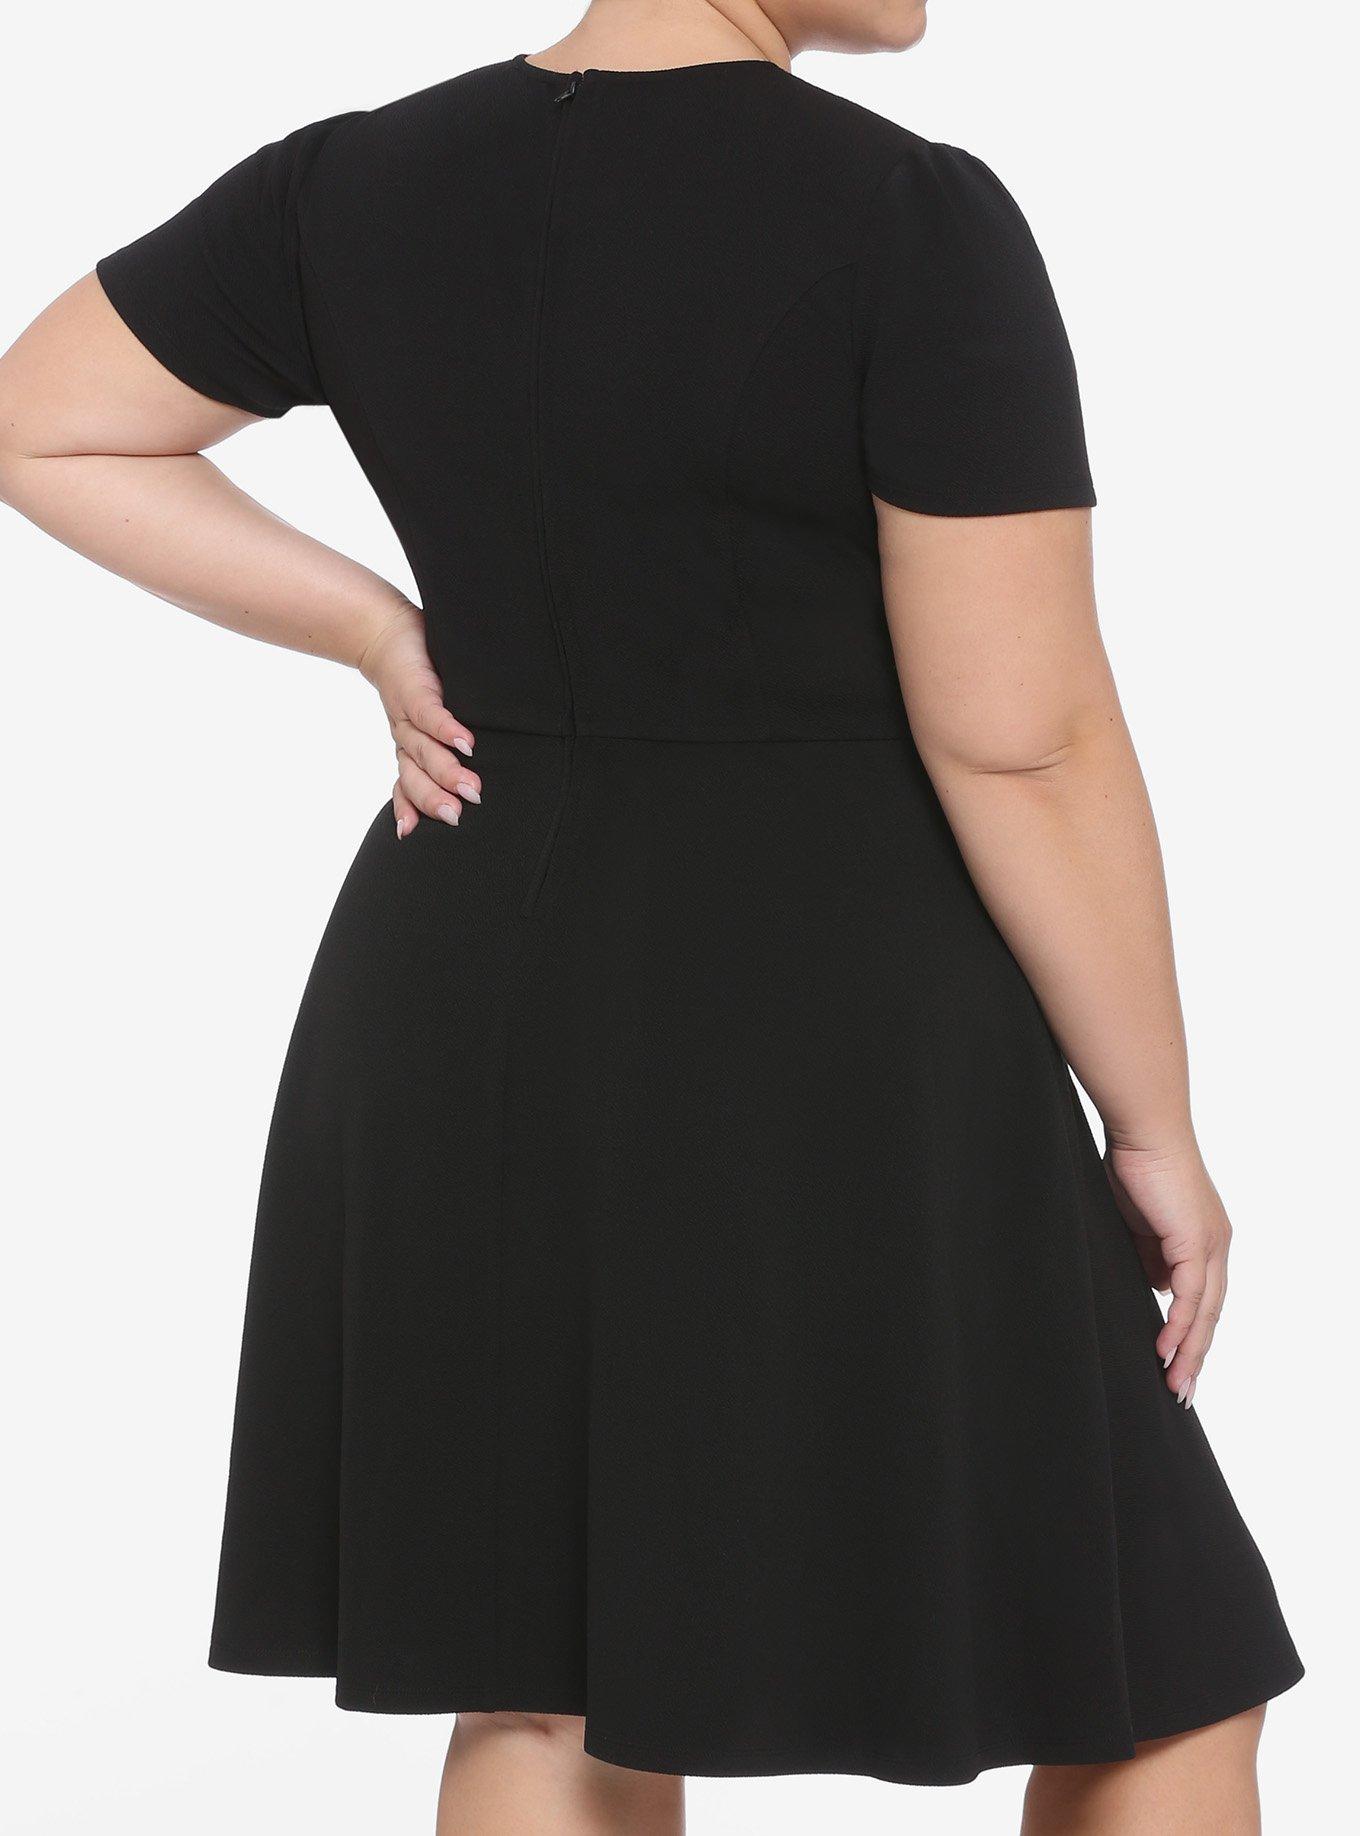 Black & White Lace Collar Dress Plus Size, BLACK, alternate